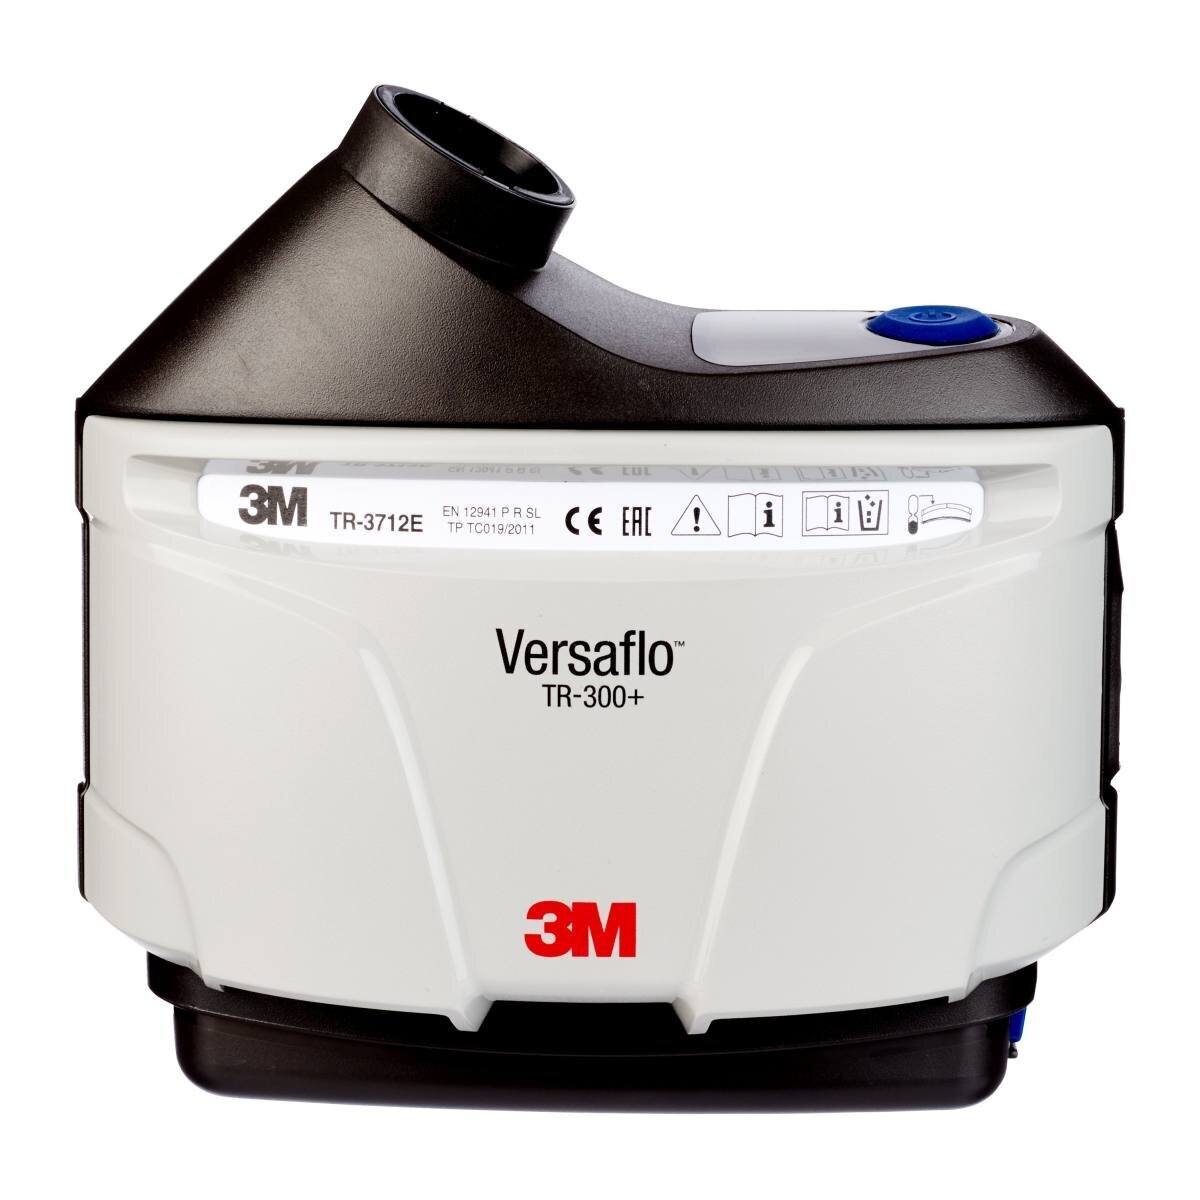 3M Versaflo TR-302E+ ventilatoreenheid met filterdeksel &amp; luchtstroomindicator